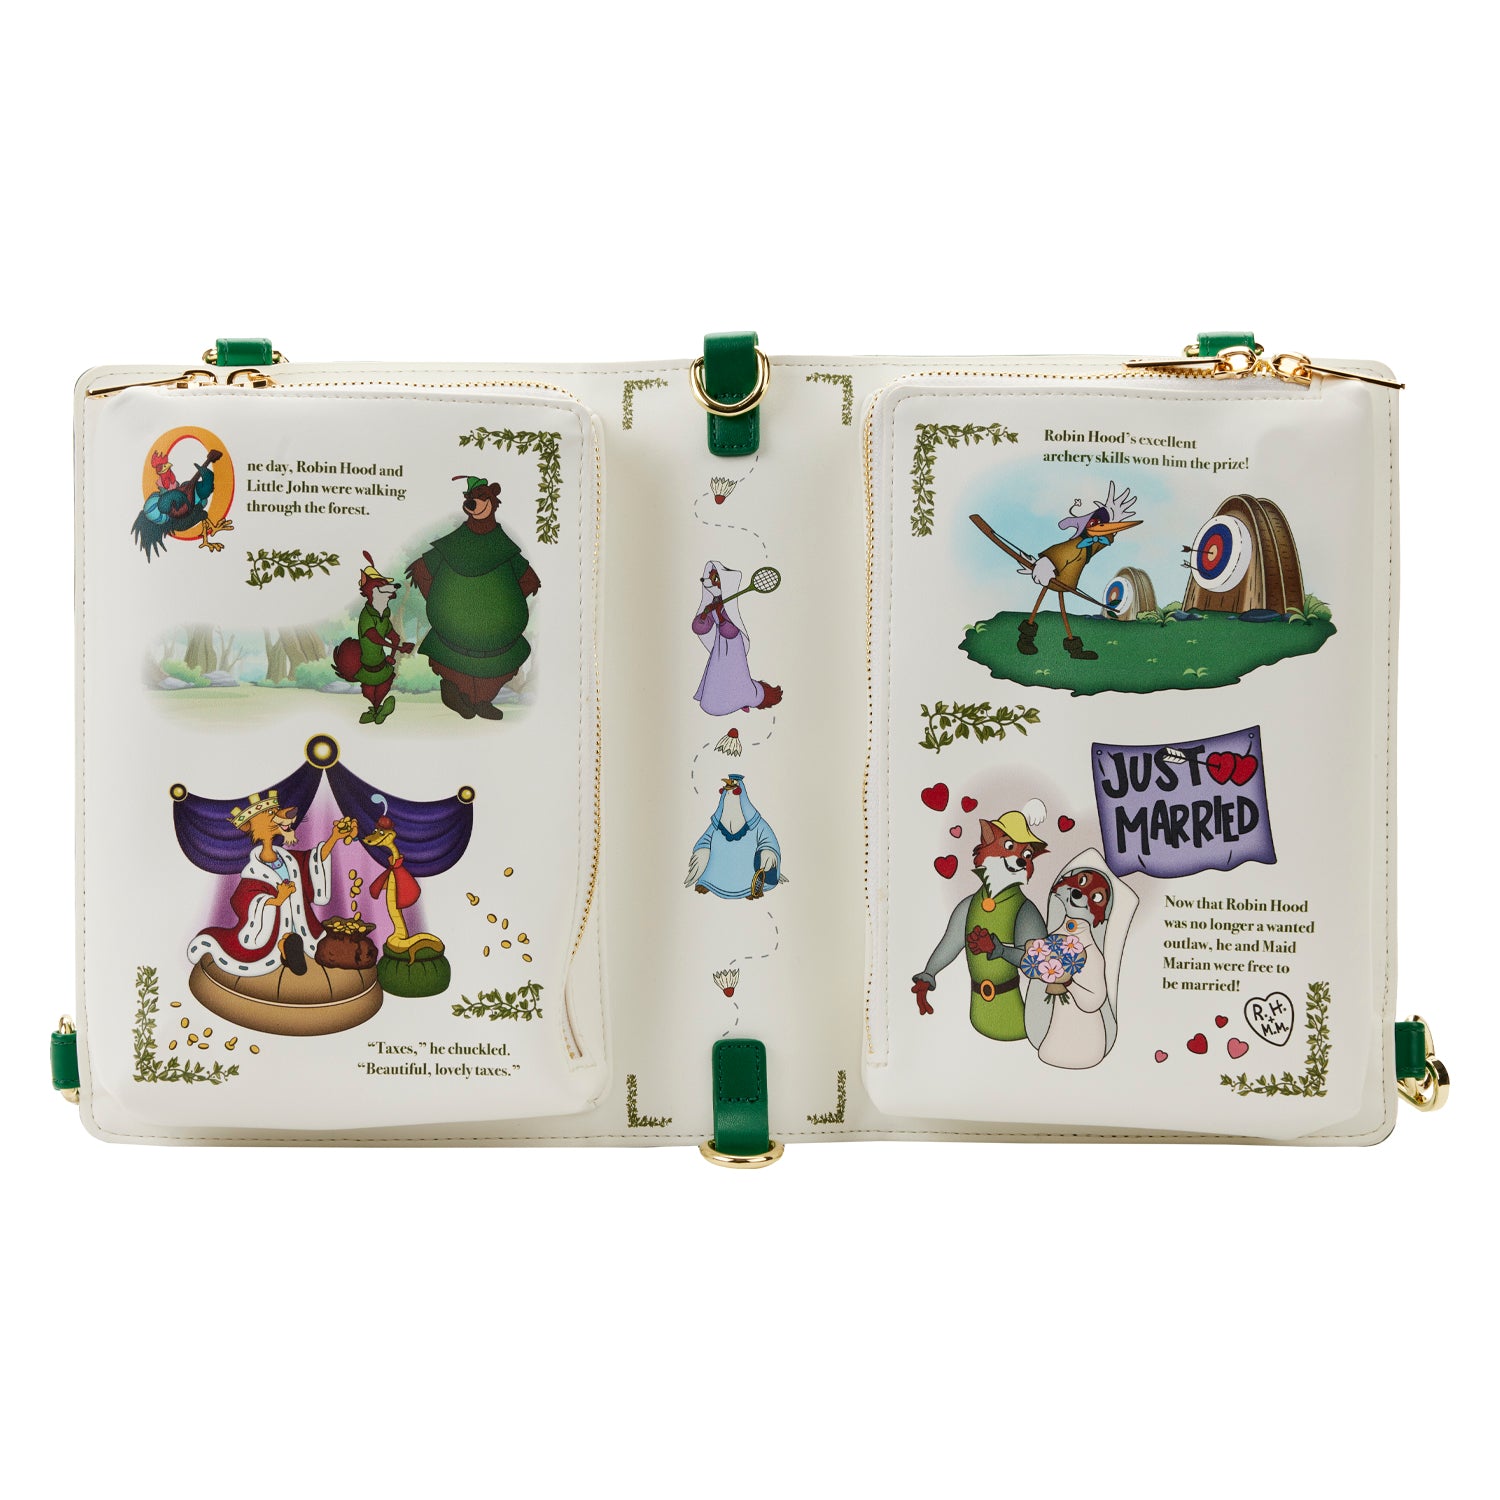 Loungefly Disney Classic Book Robin Hood Convertible Crossbody Bag